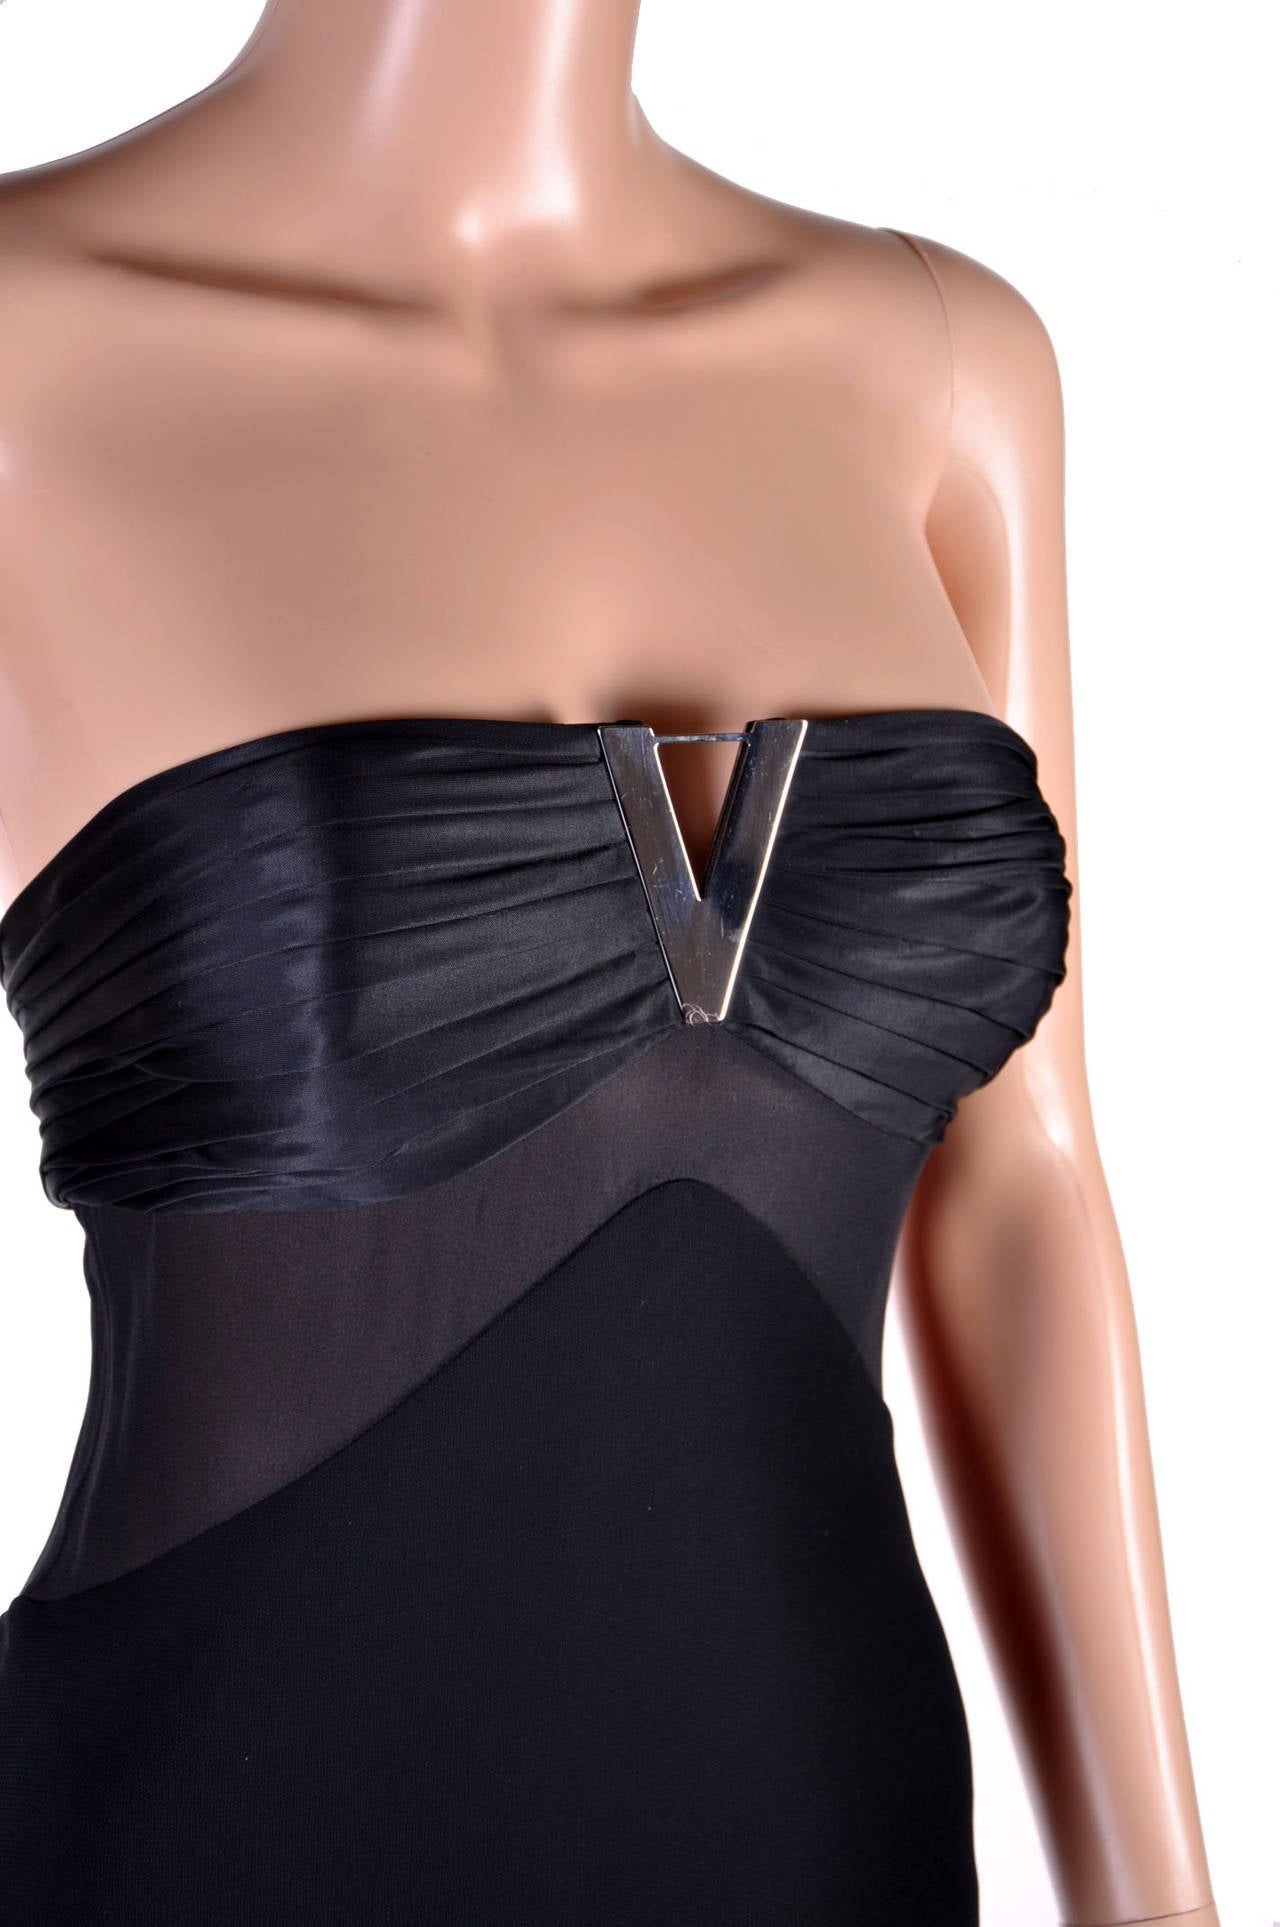 Women's New VERSACE BLACK STRAPLESS DRESS GOWN